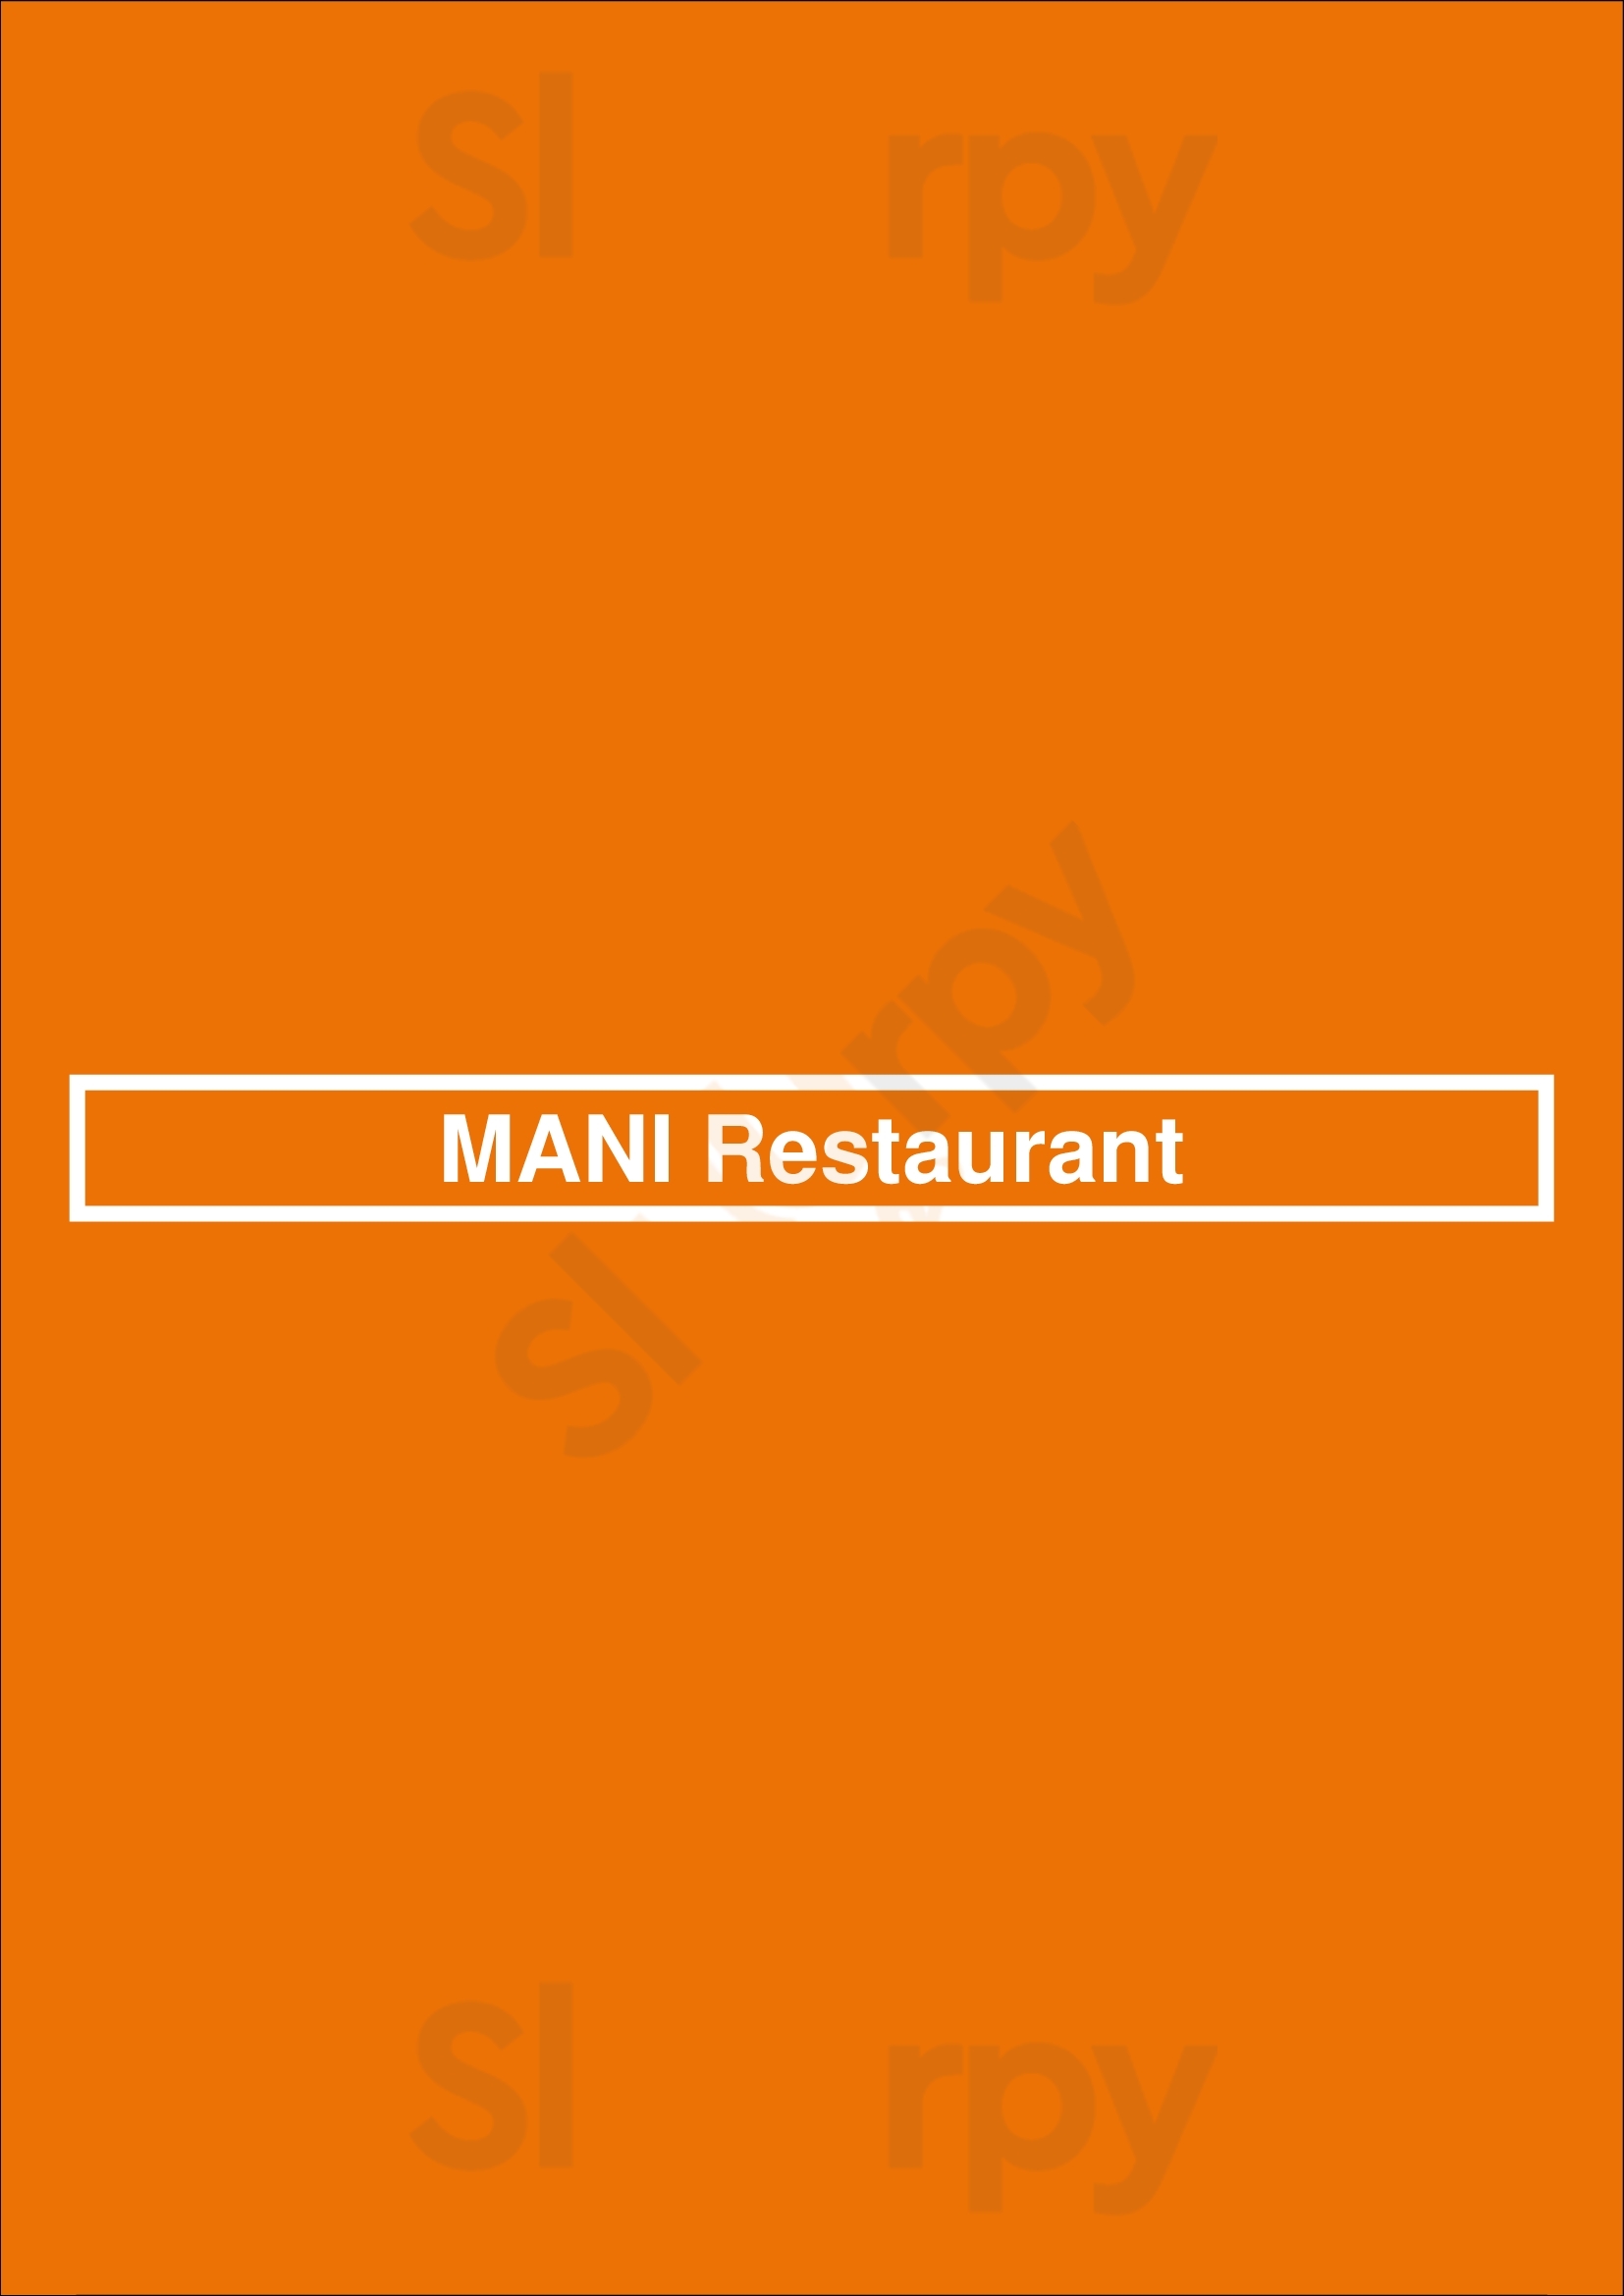 Mani Restaurant Berlin Menu - 1